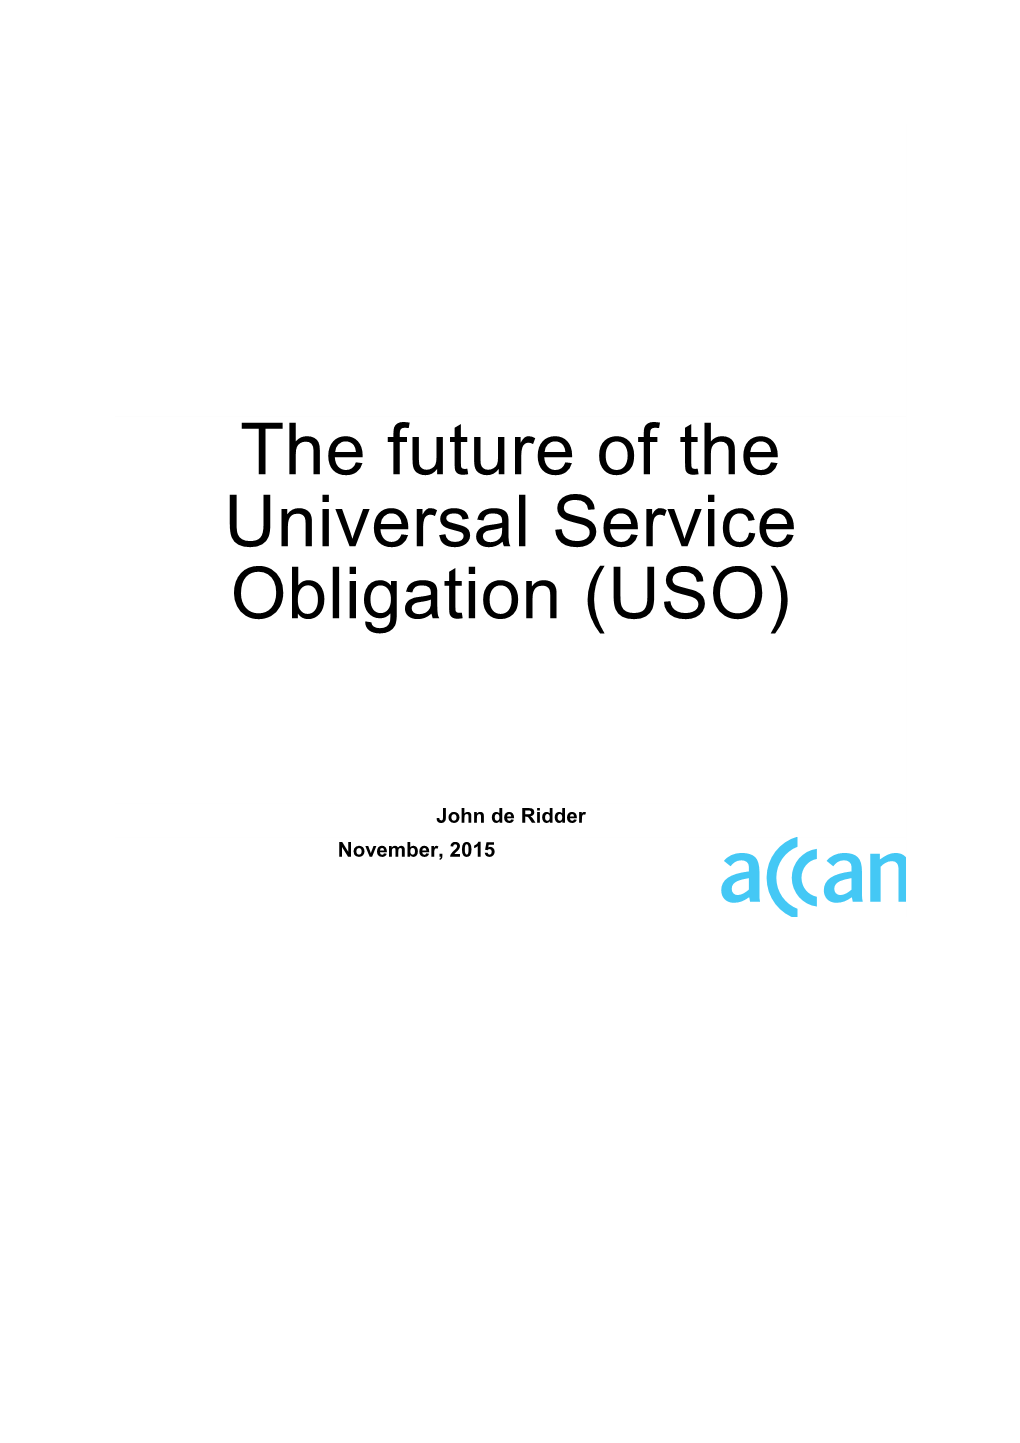 The Future of the Universal Service Obligation (USO)